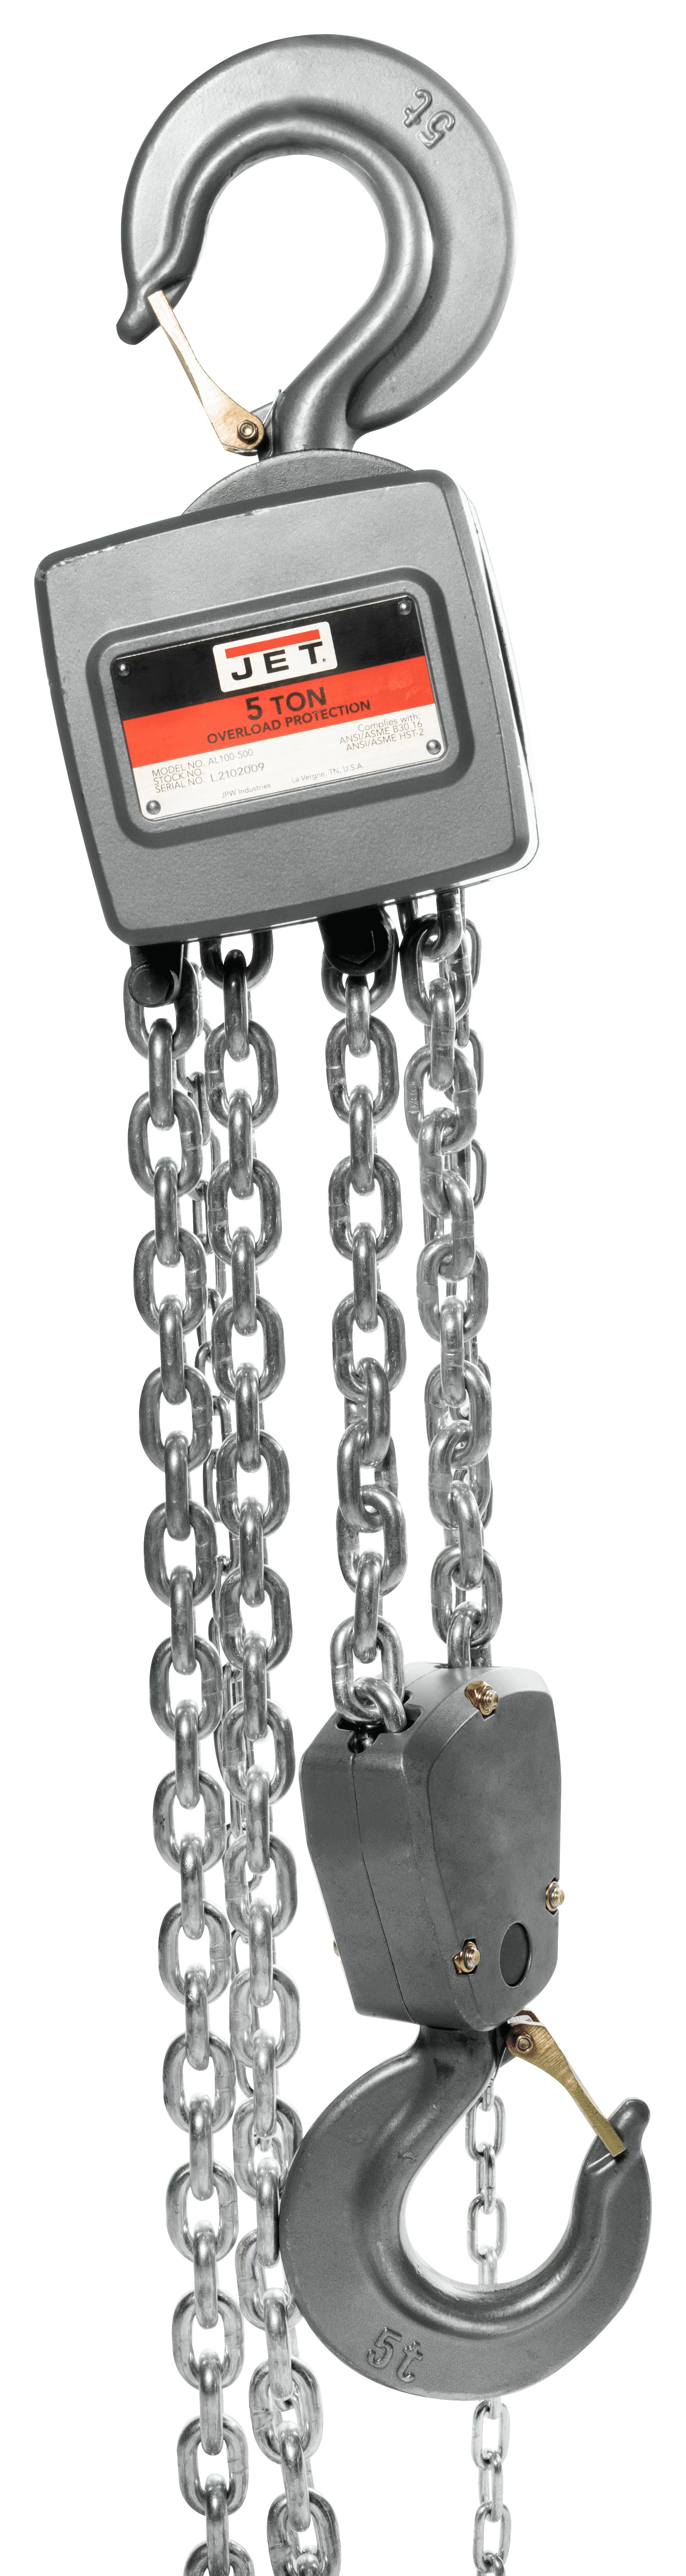 AL100-500-30 5 Ton Aluminum Hand Chain Hoist with 30ft of Lift